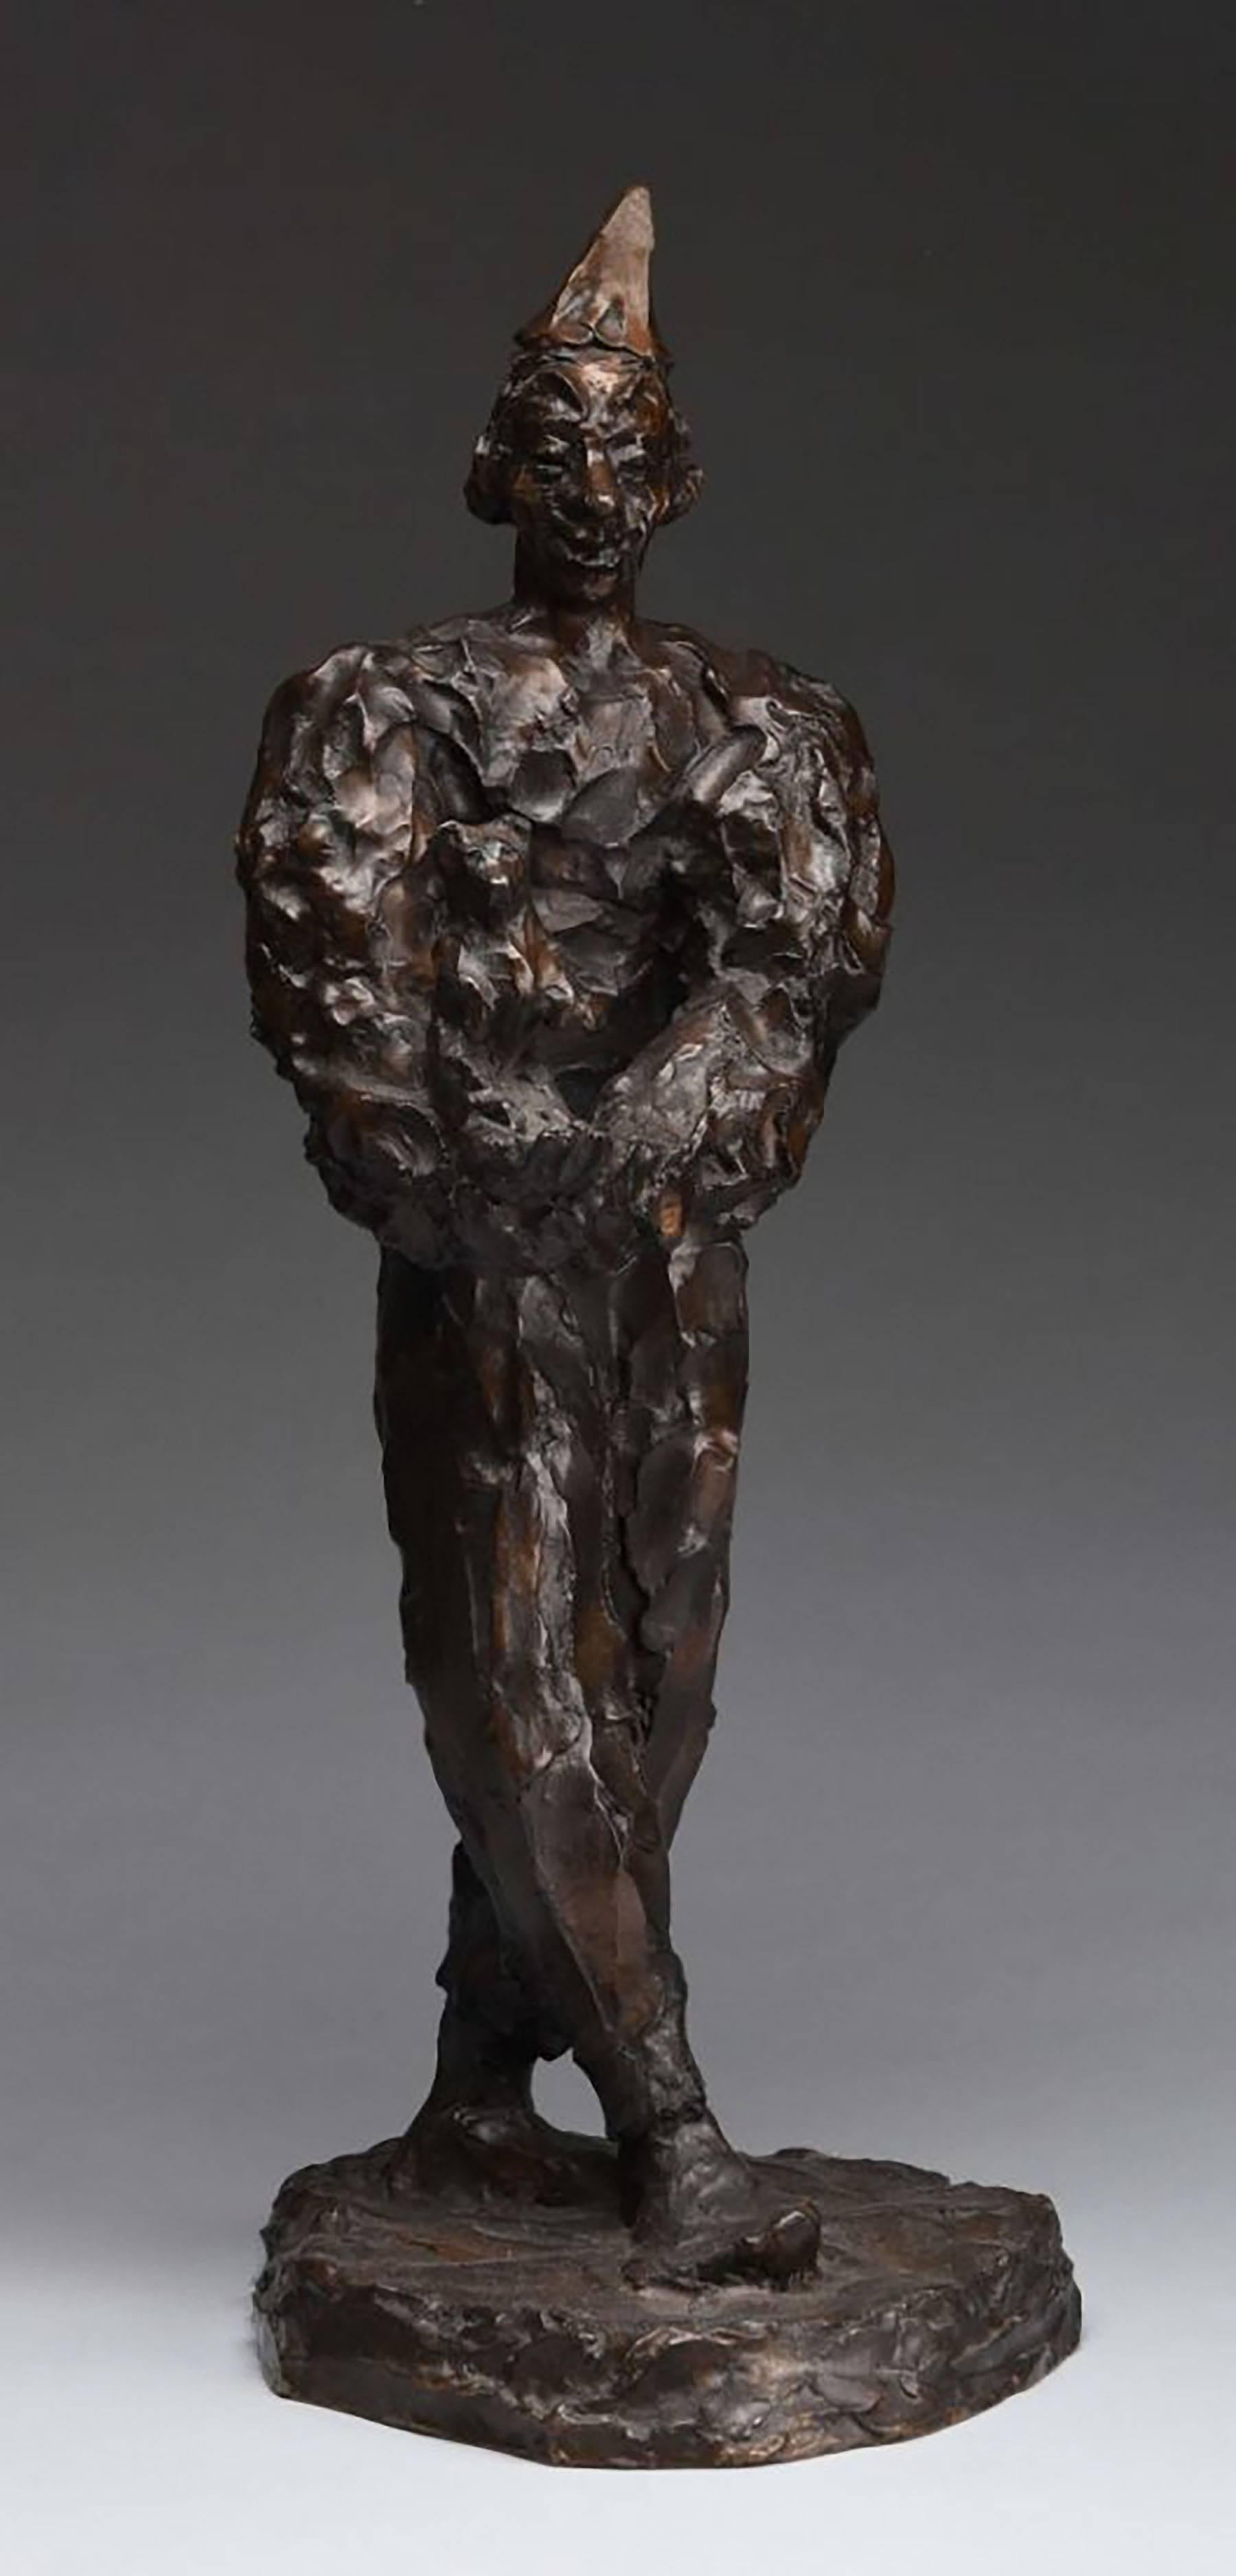 Agnes Yarnall Figurative Sculpture - Clown Holding Teddy Bear, Unique Bronze Expressionist Sculpture